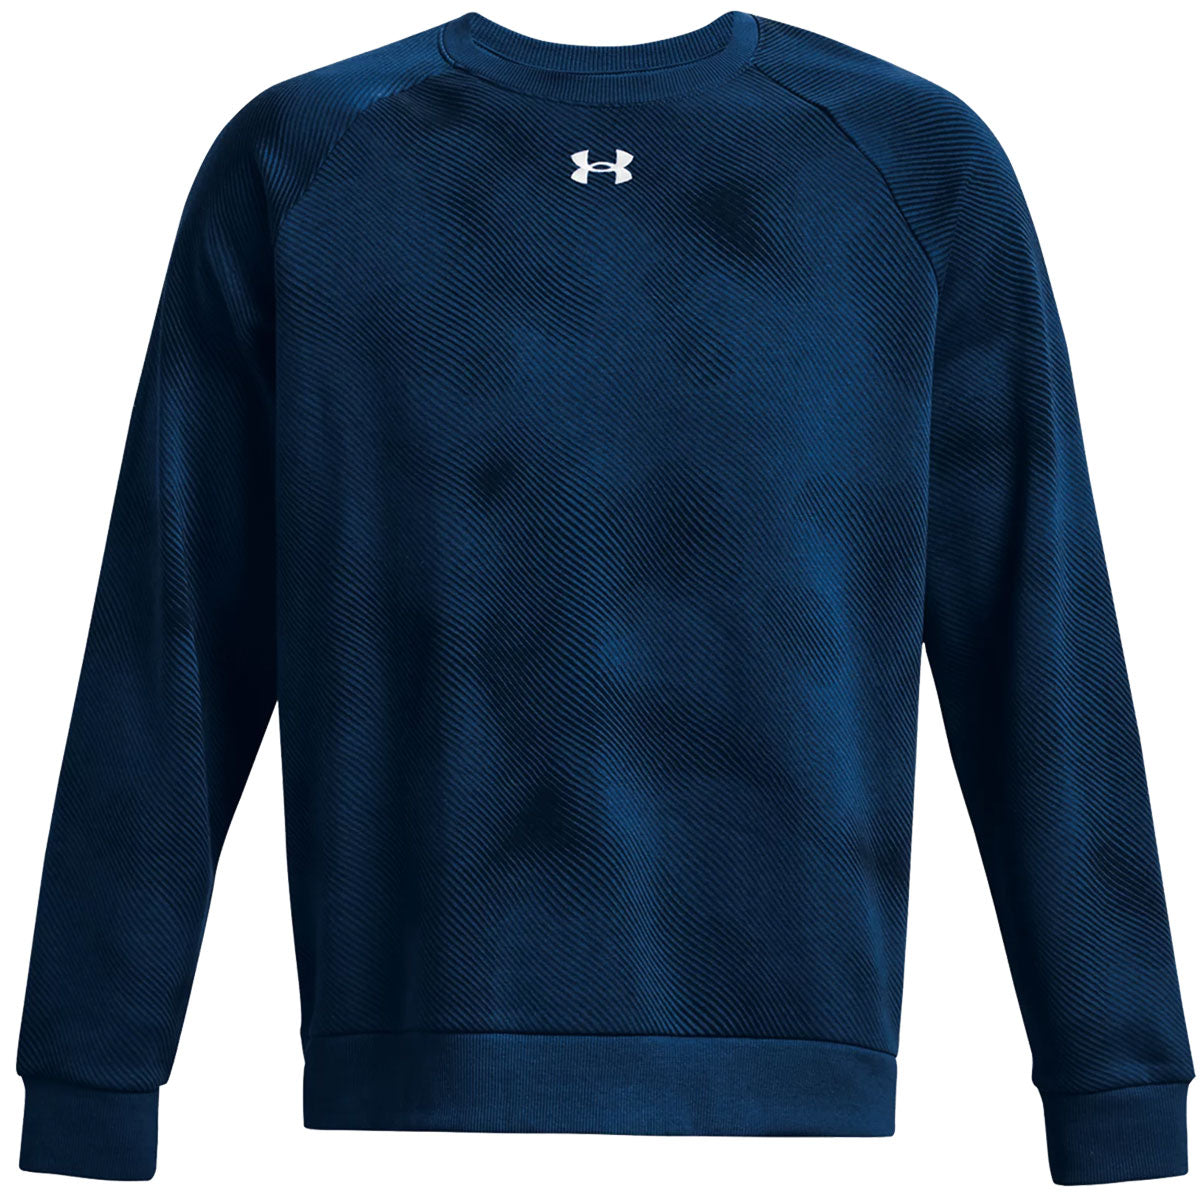 Under Armour Rival Fleece Printed Crew Sweatshirt - Mens - Varsity Blue/White